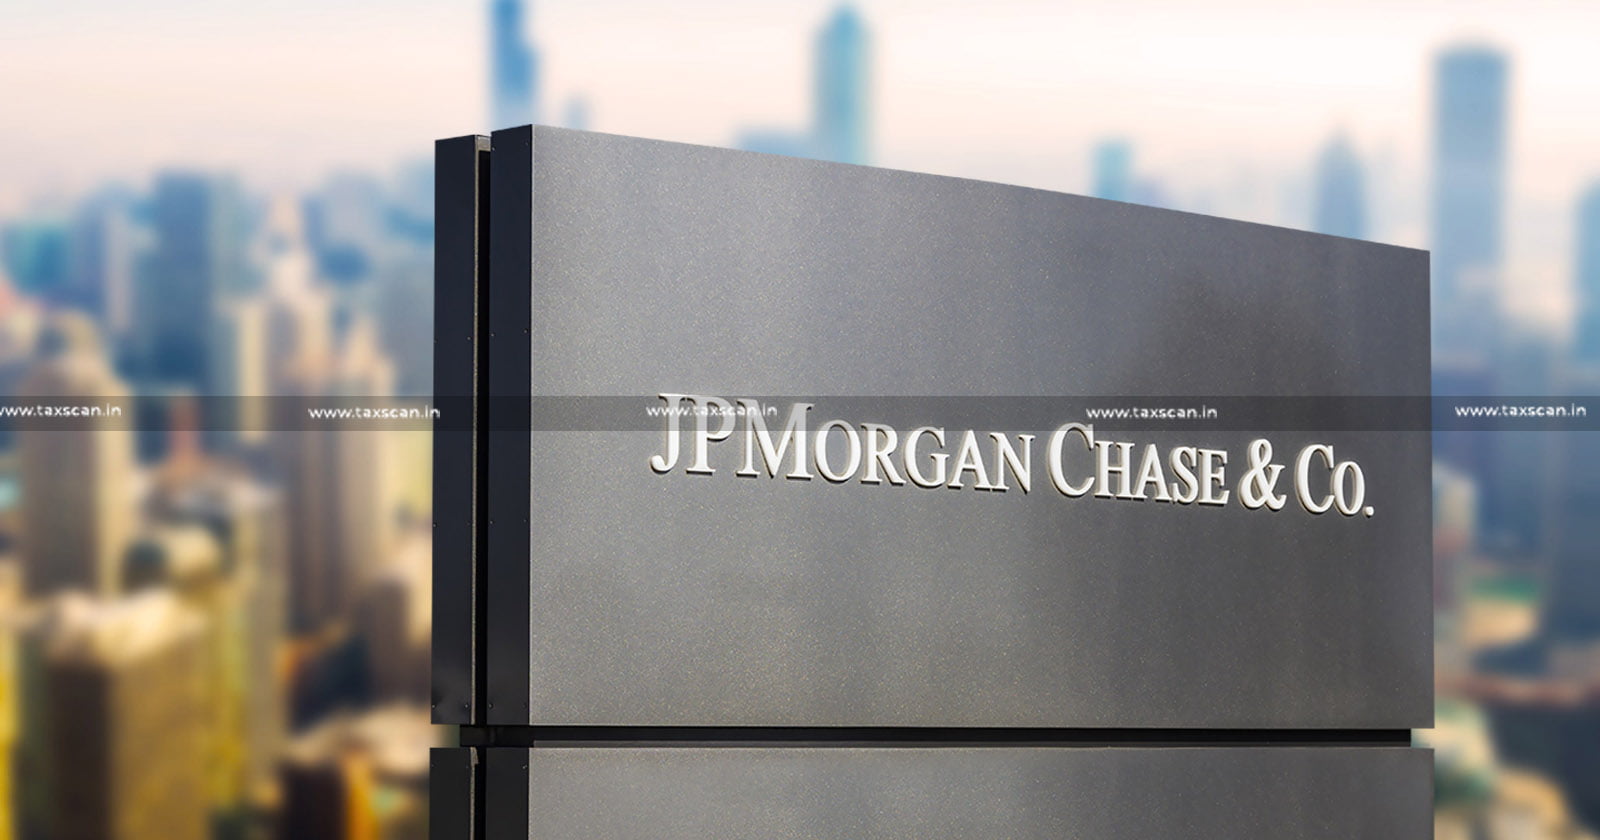 MBA Vacancy in JPMorgan - B. com Vacancy in JPMorgan - MBA Hiring in JPMorgan - taxscan